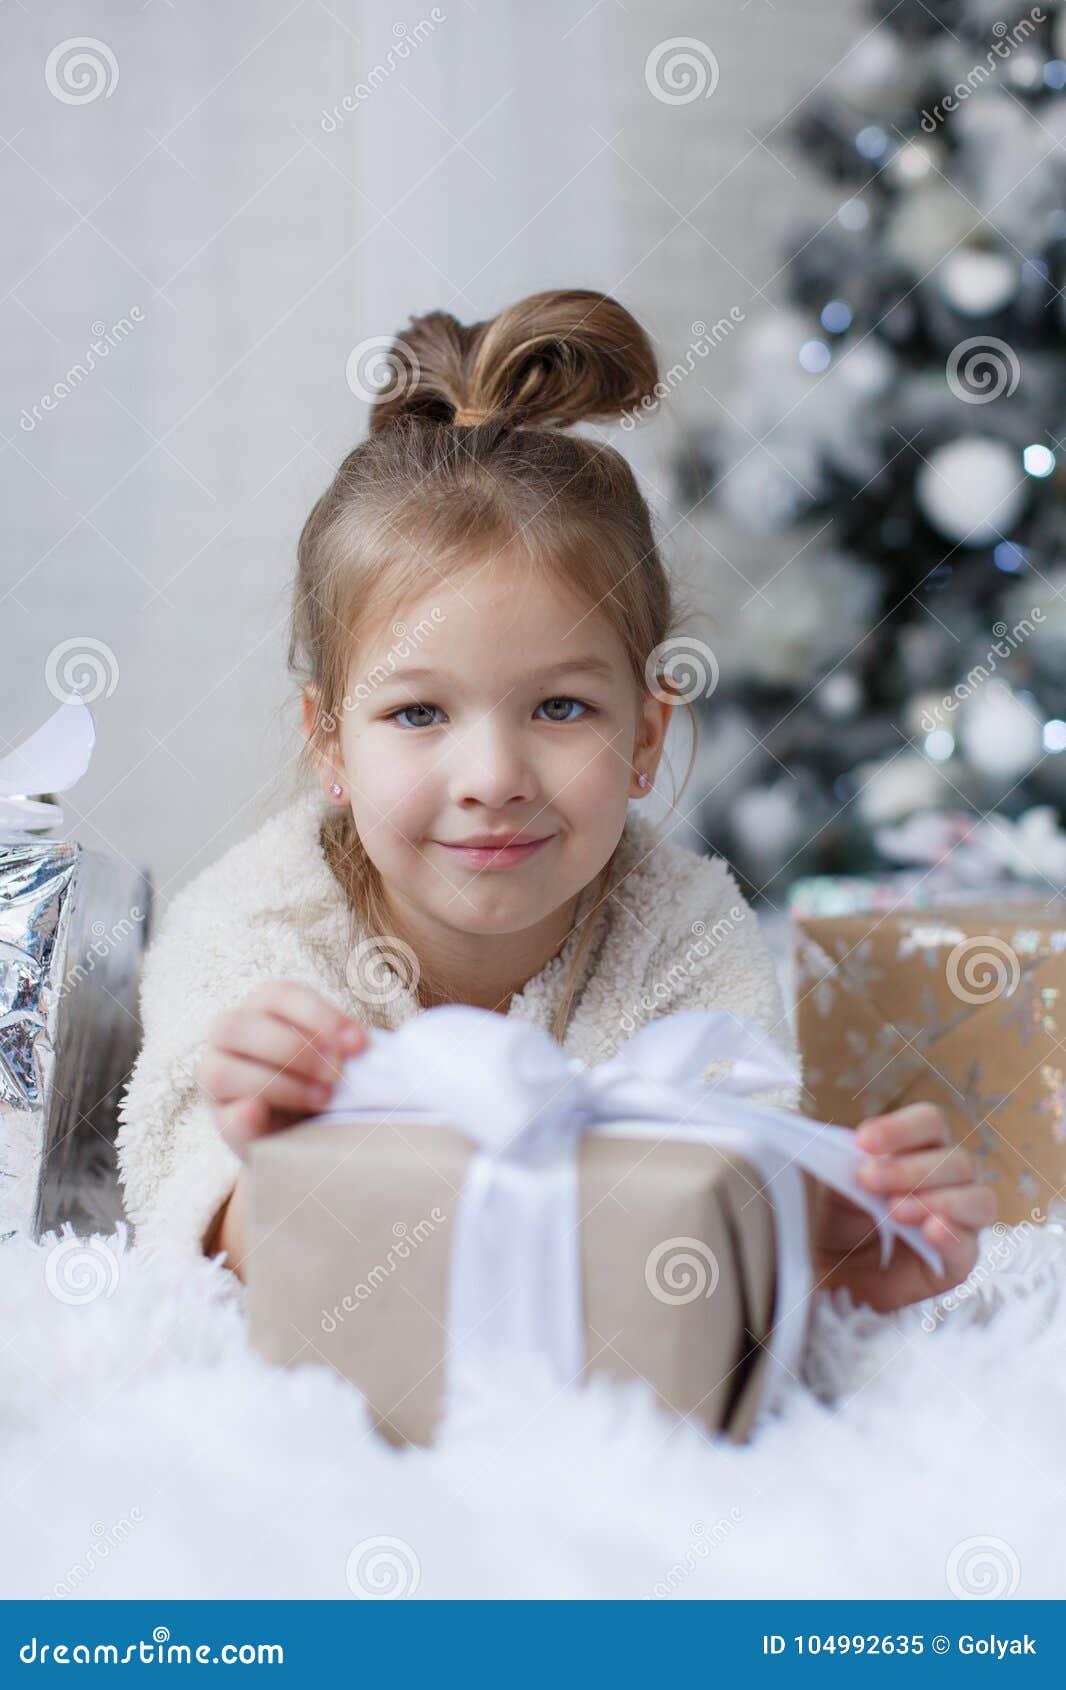 Little Girl Sitting On The Floor Near The Christmas Tree